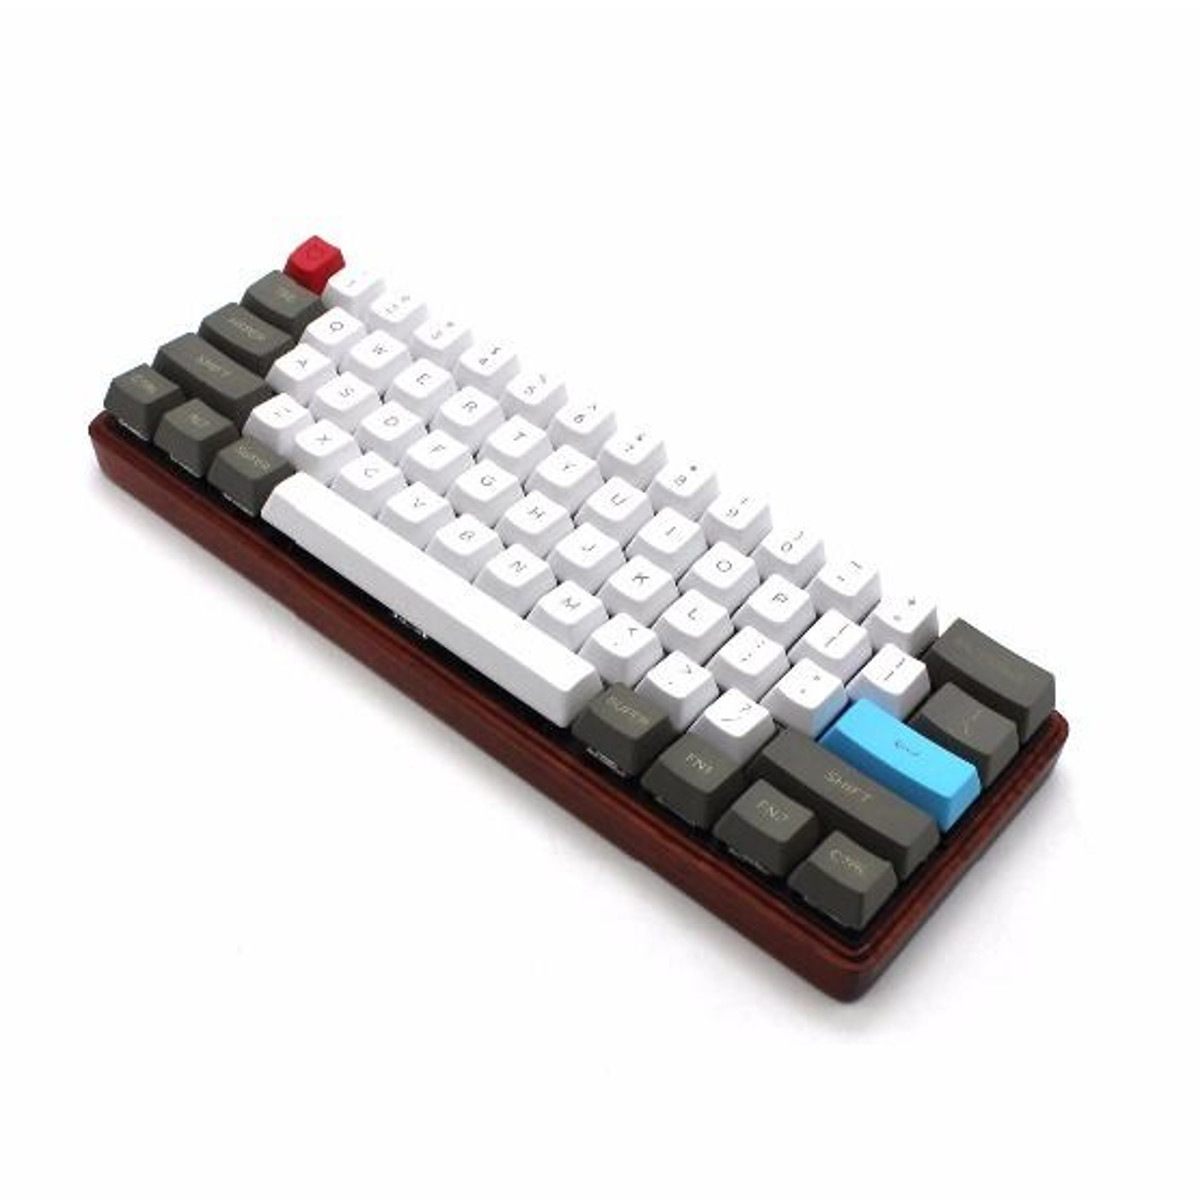 61 Keys White&Grey Keycap Set OEM Profile PBT Thick ANSI Layout Keycaps for 60% Mechanical Keyboard 1